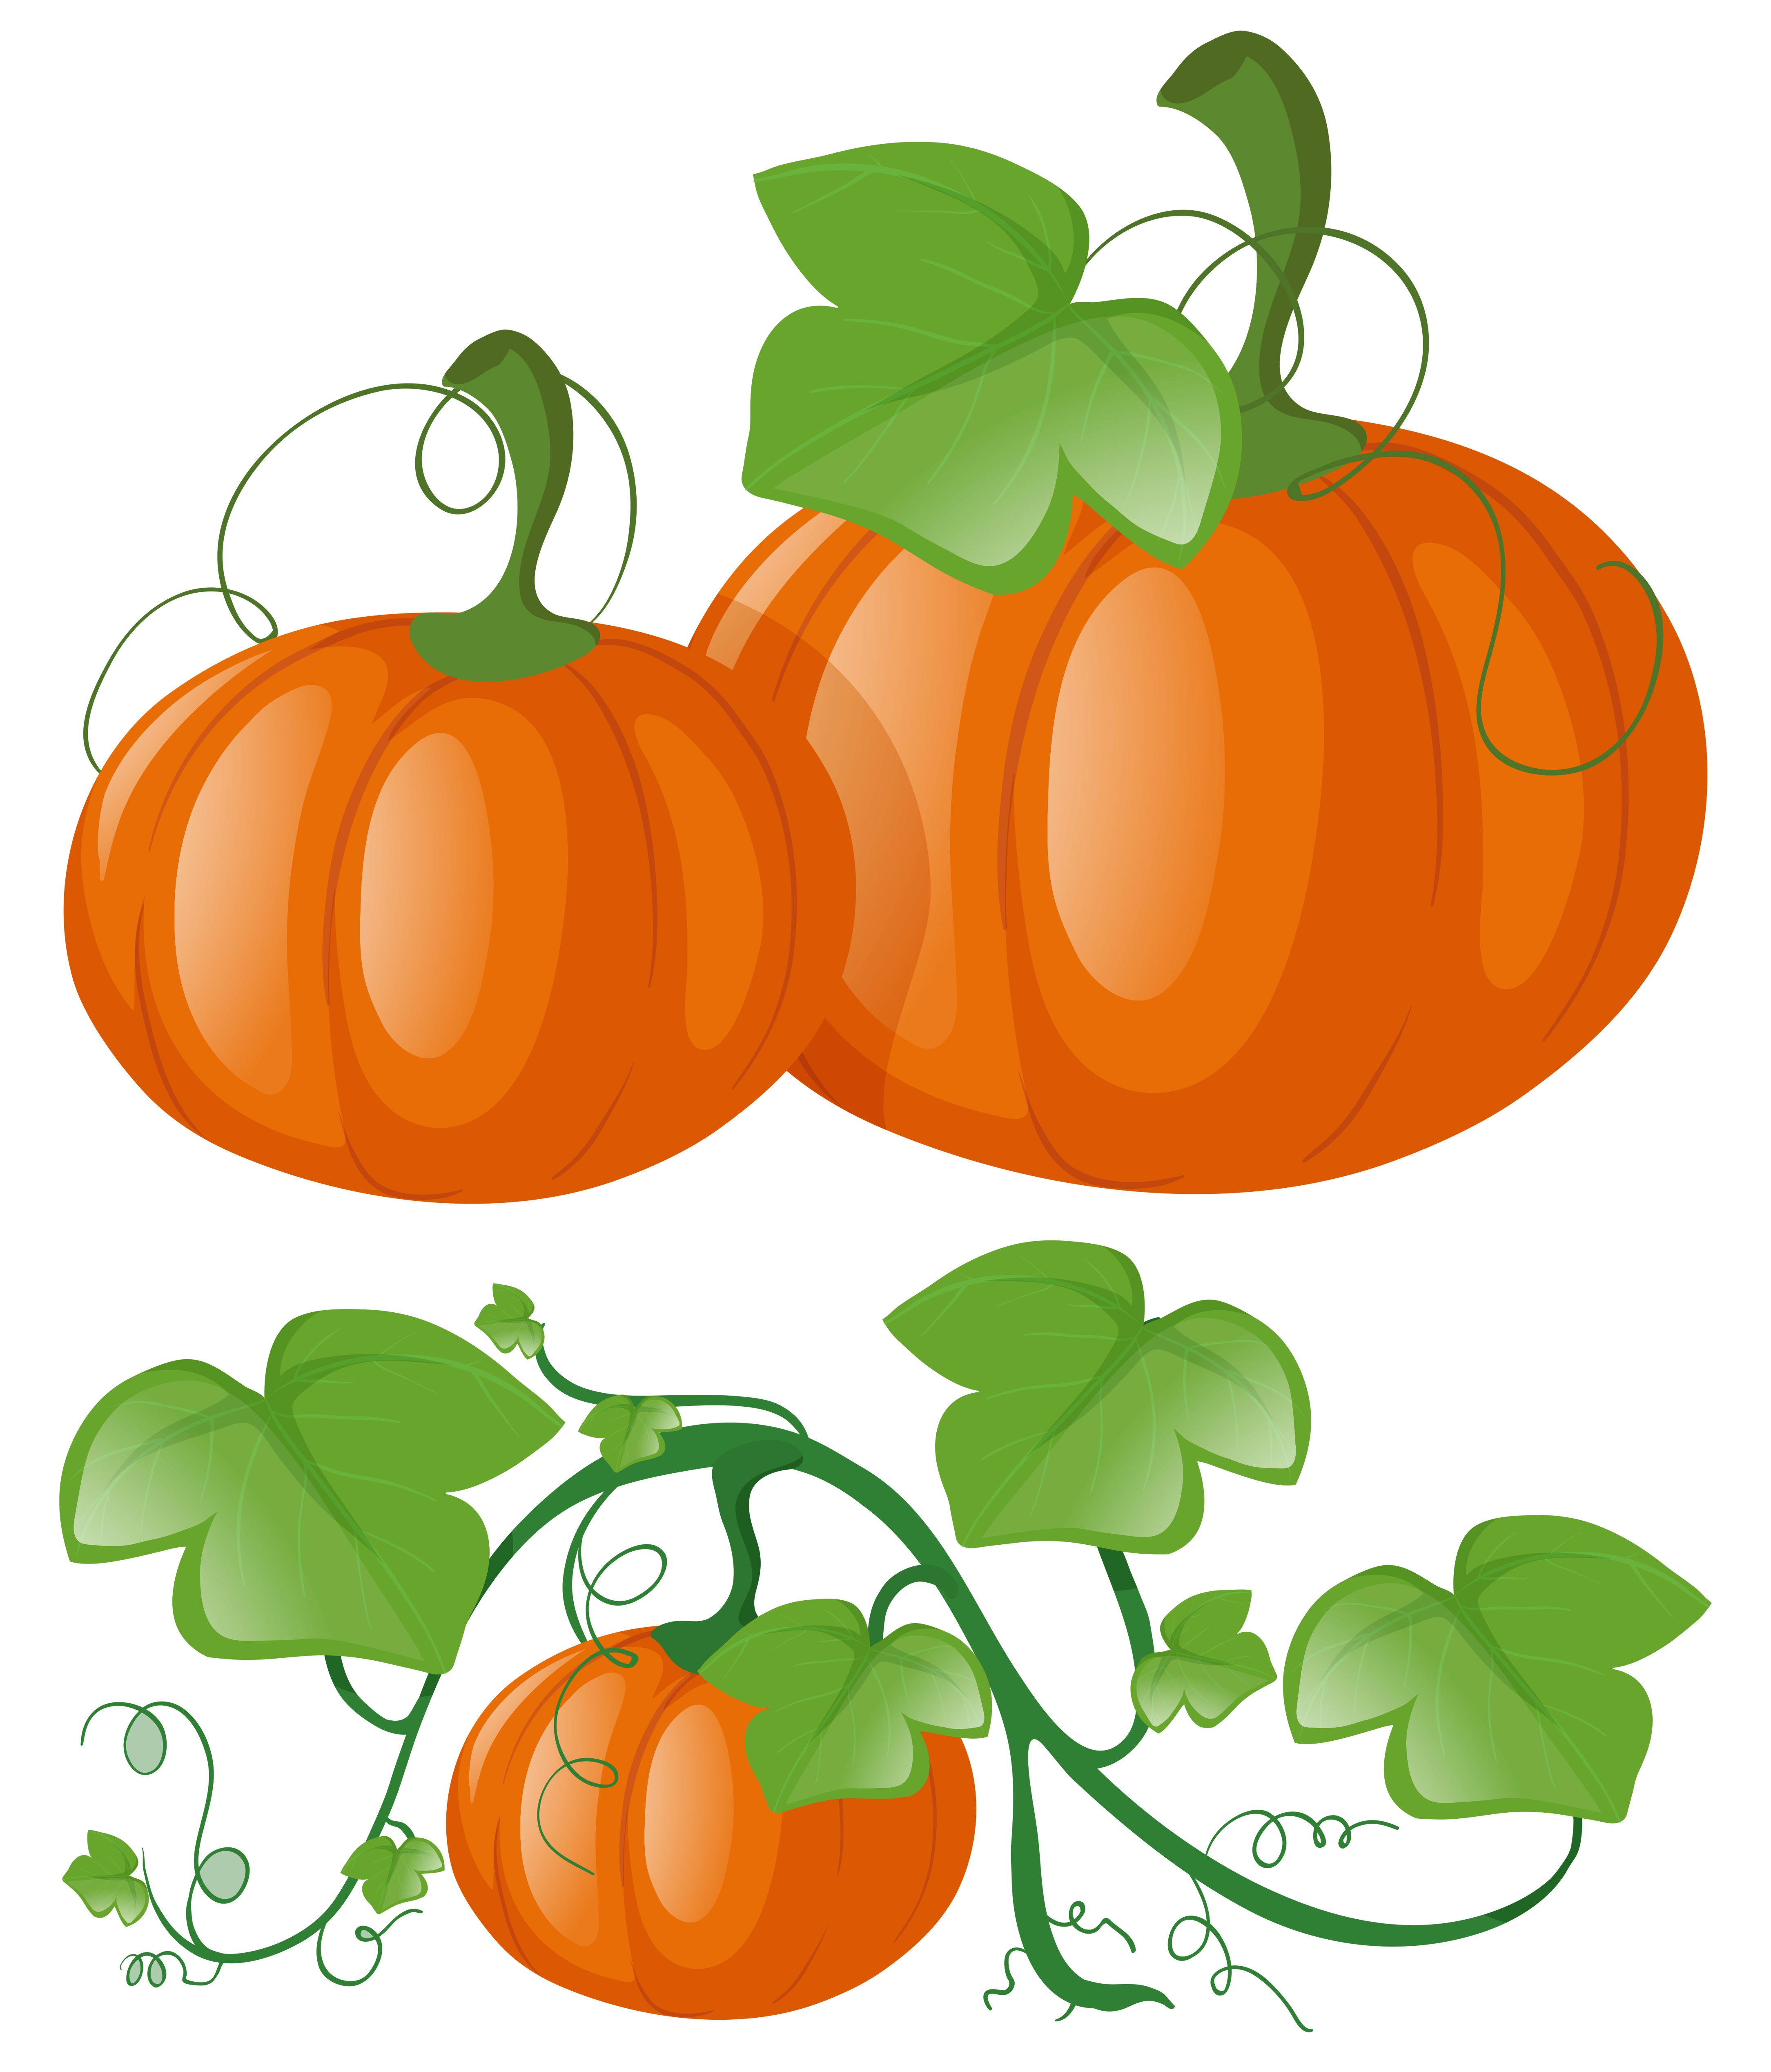 Pumpkin Vines Free Vector Art (14 Free Downloads)